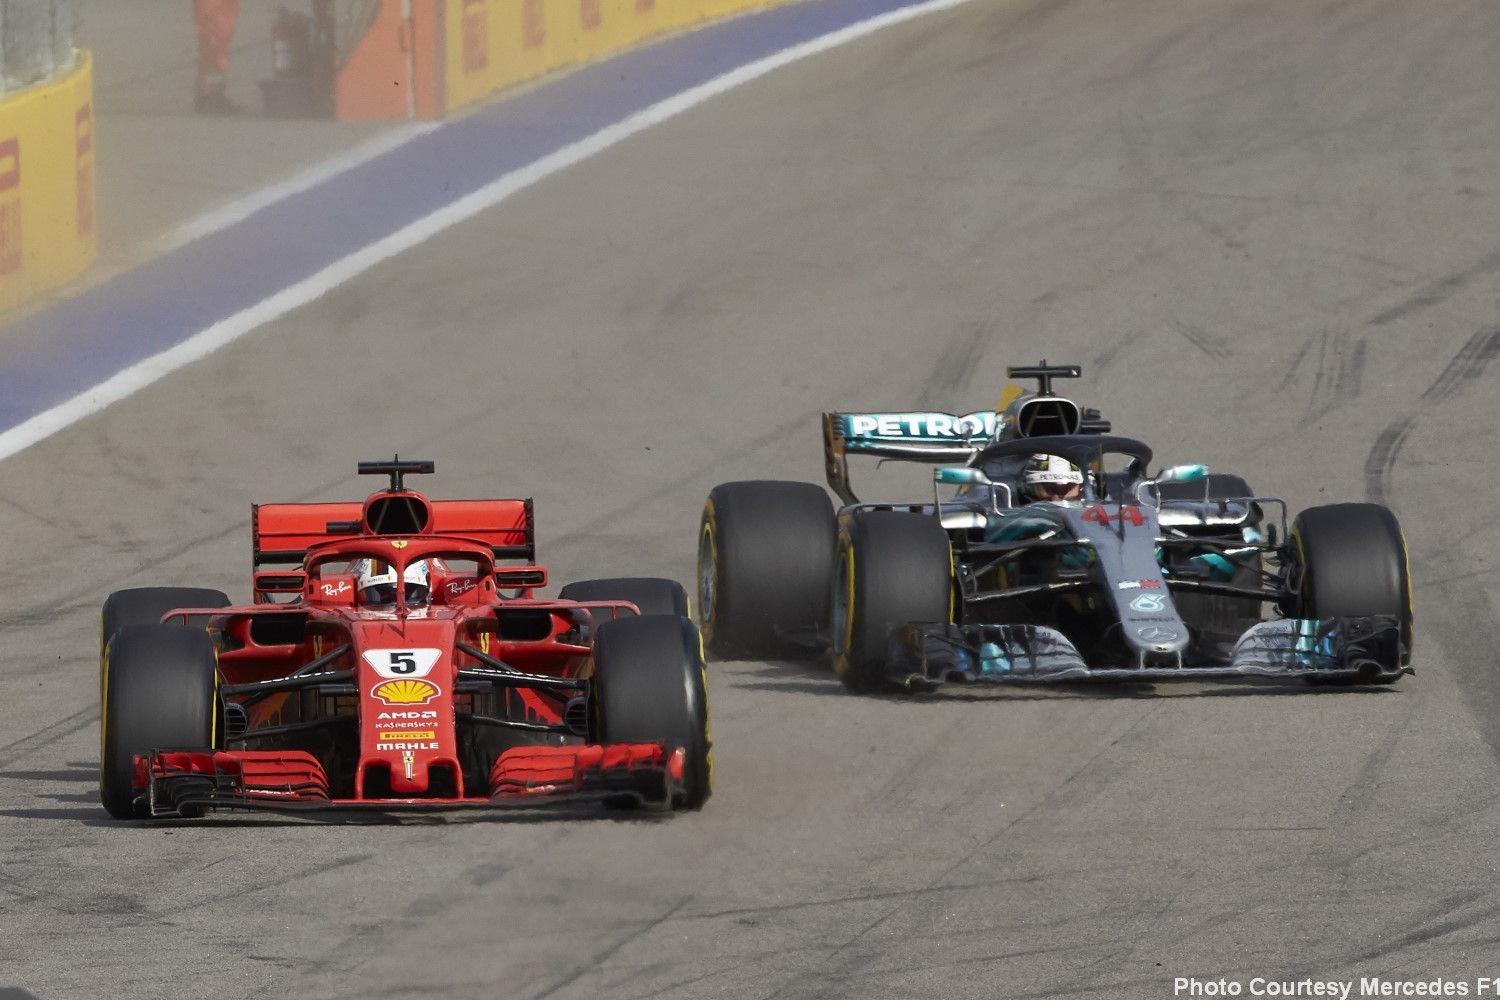 Can Ferrari beat Mercedes 4-straight races?